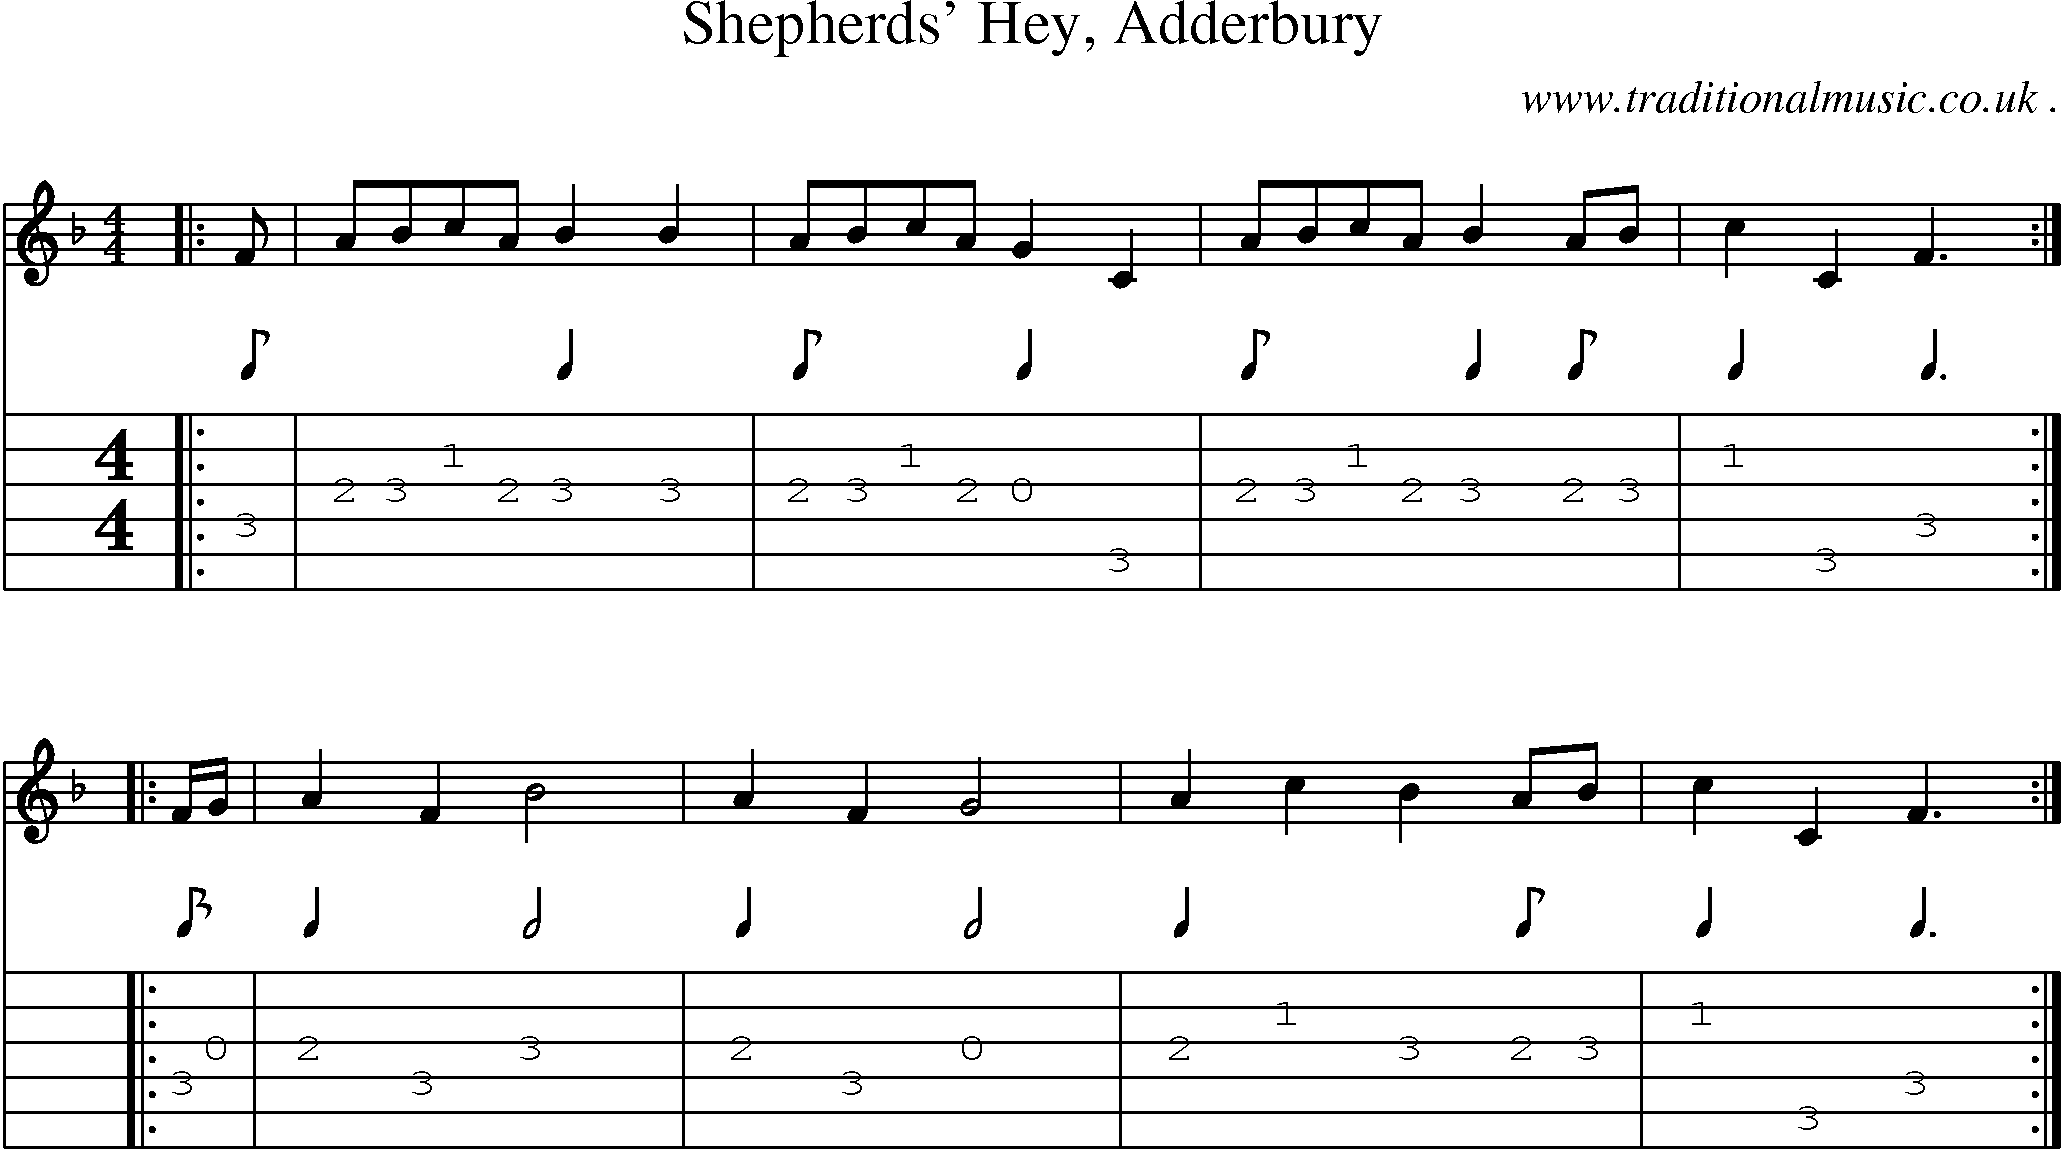 Sheet-Music and Guitar Tabs for Shepherds Hey Adderbury